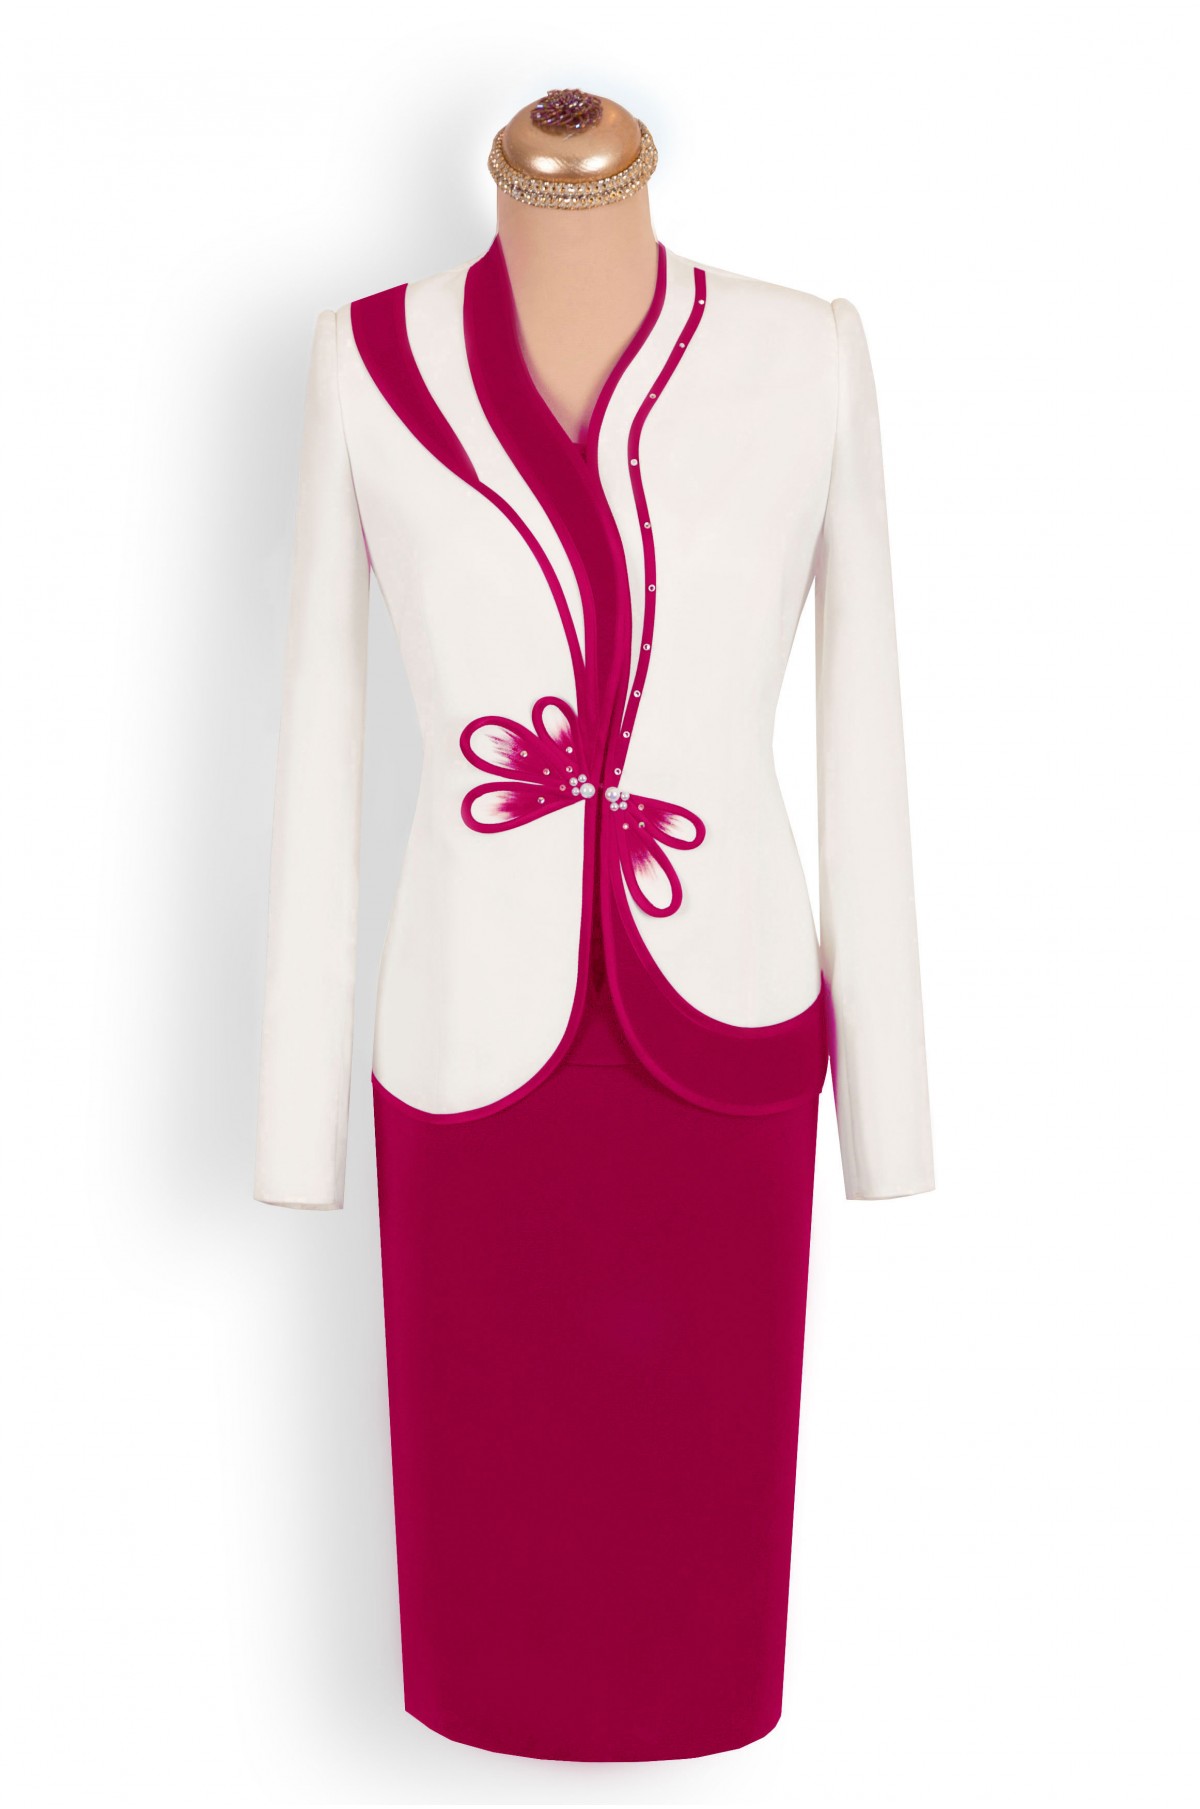 Search Betsy Trotwood shell Costum de ocazie dama elegant ieftin rosu marimi mari xxl